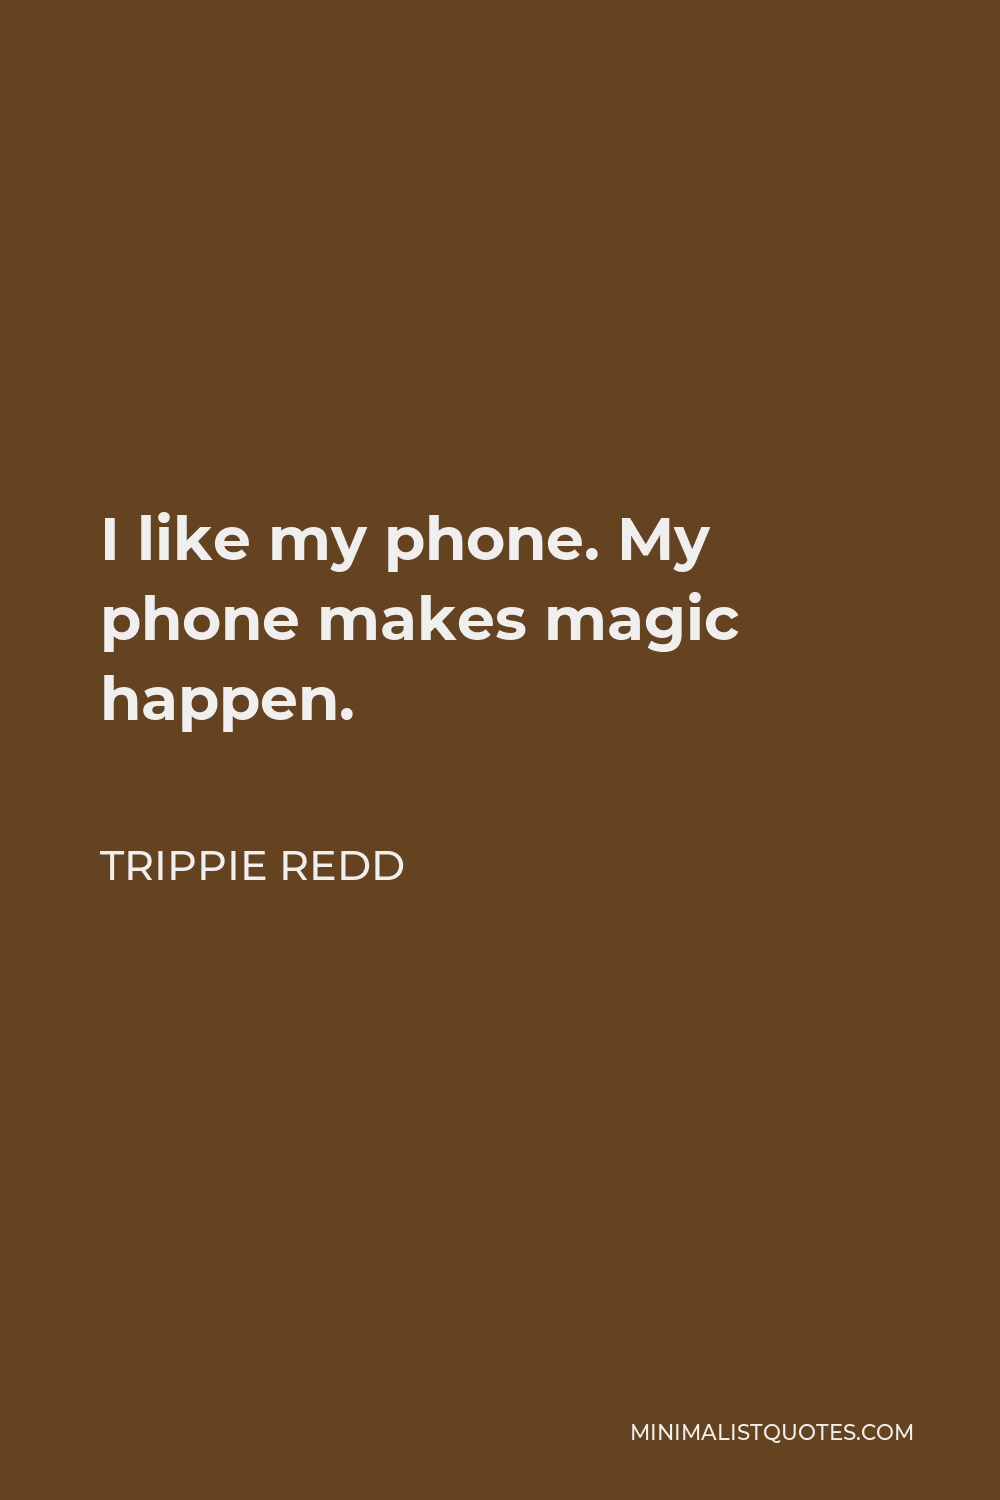 Trippie Redd Quote - I like my phone. My phone makes magic happen.